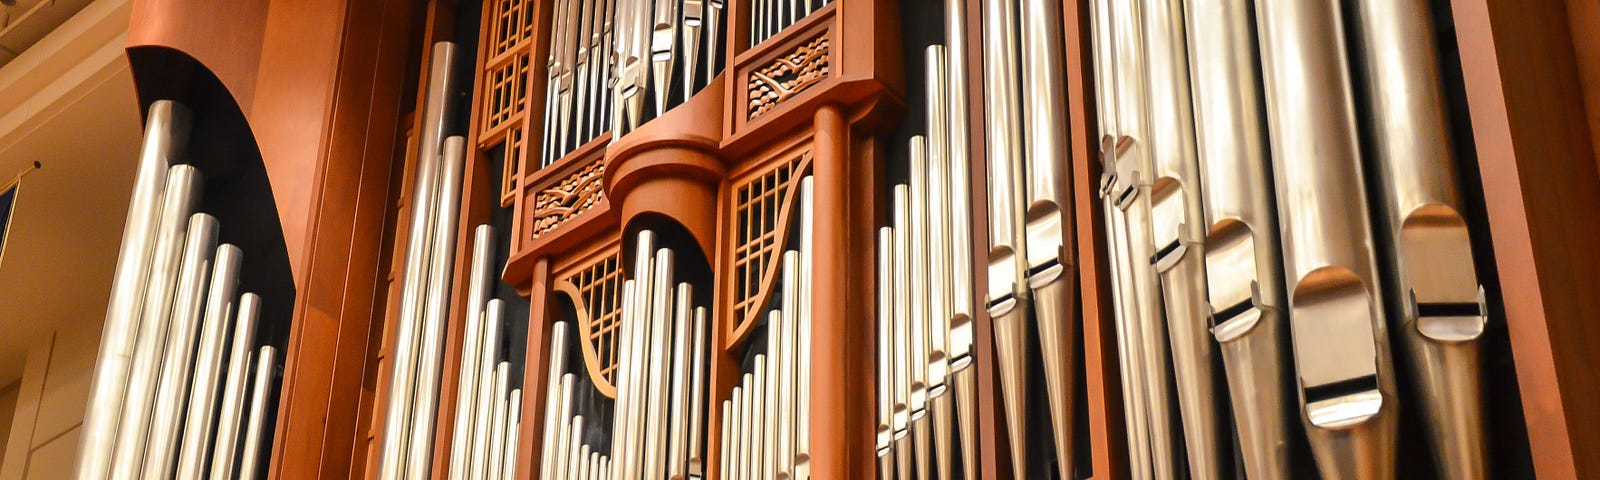 large church pipe organ